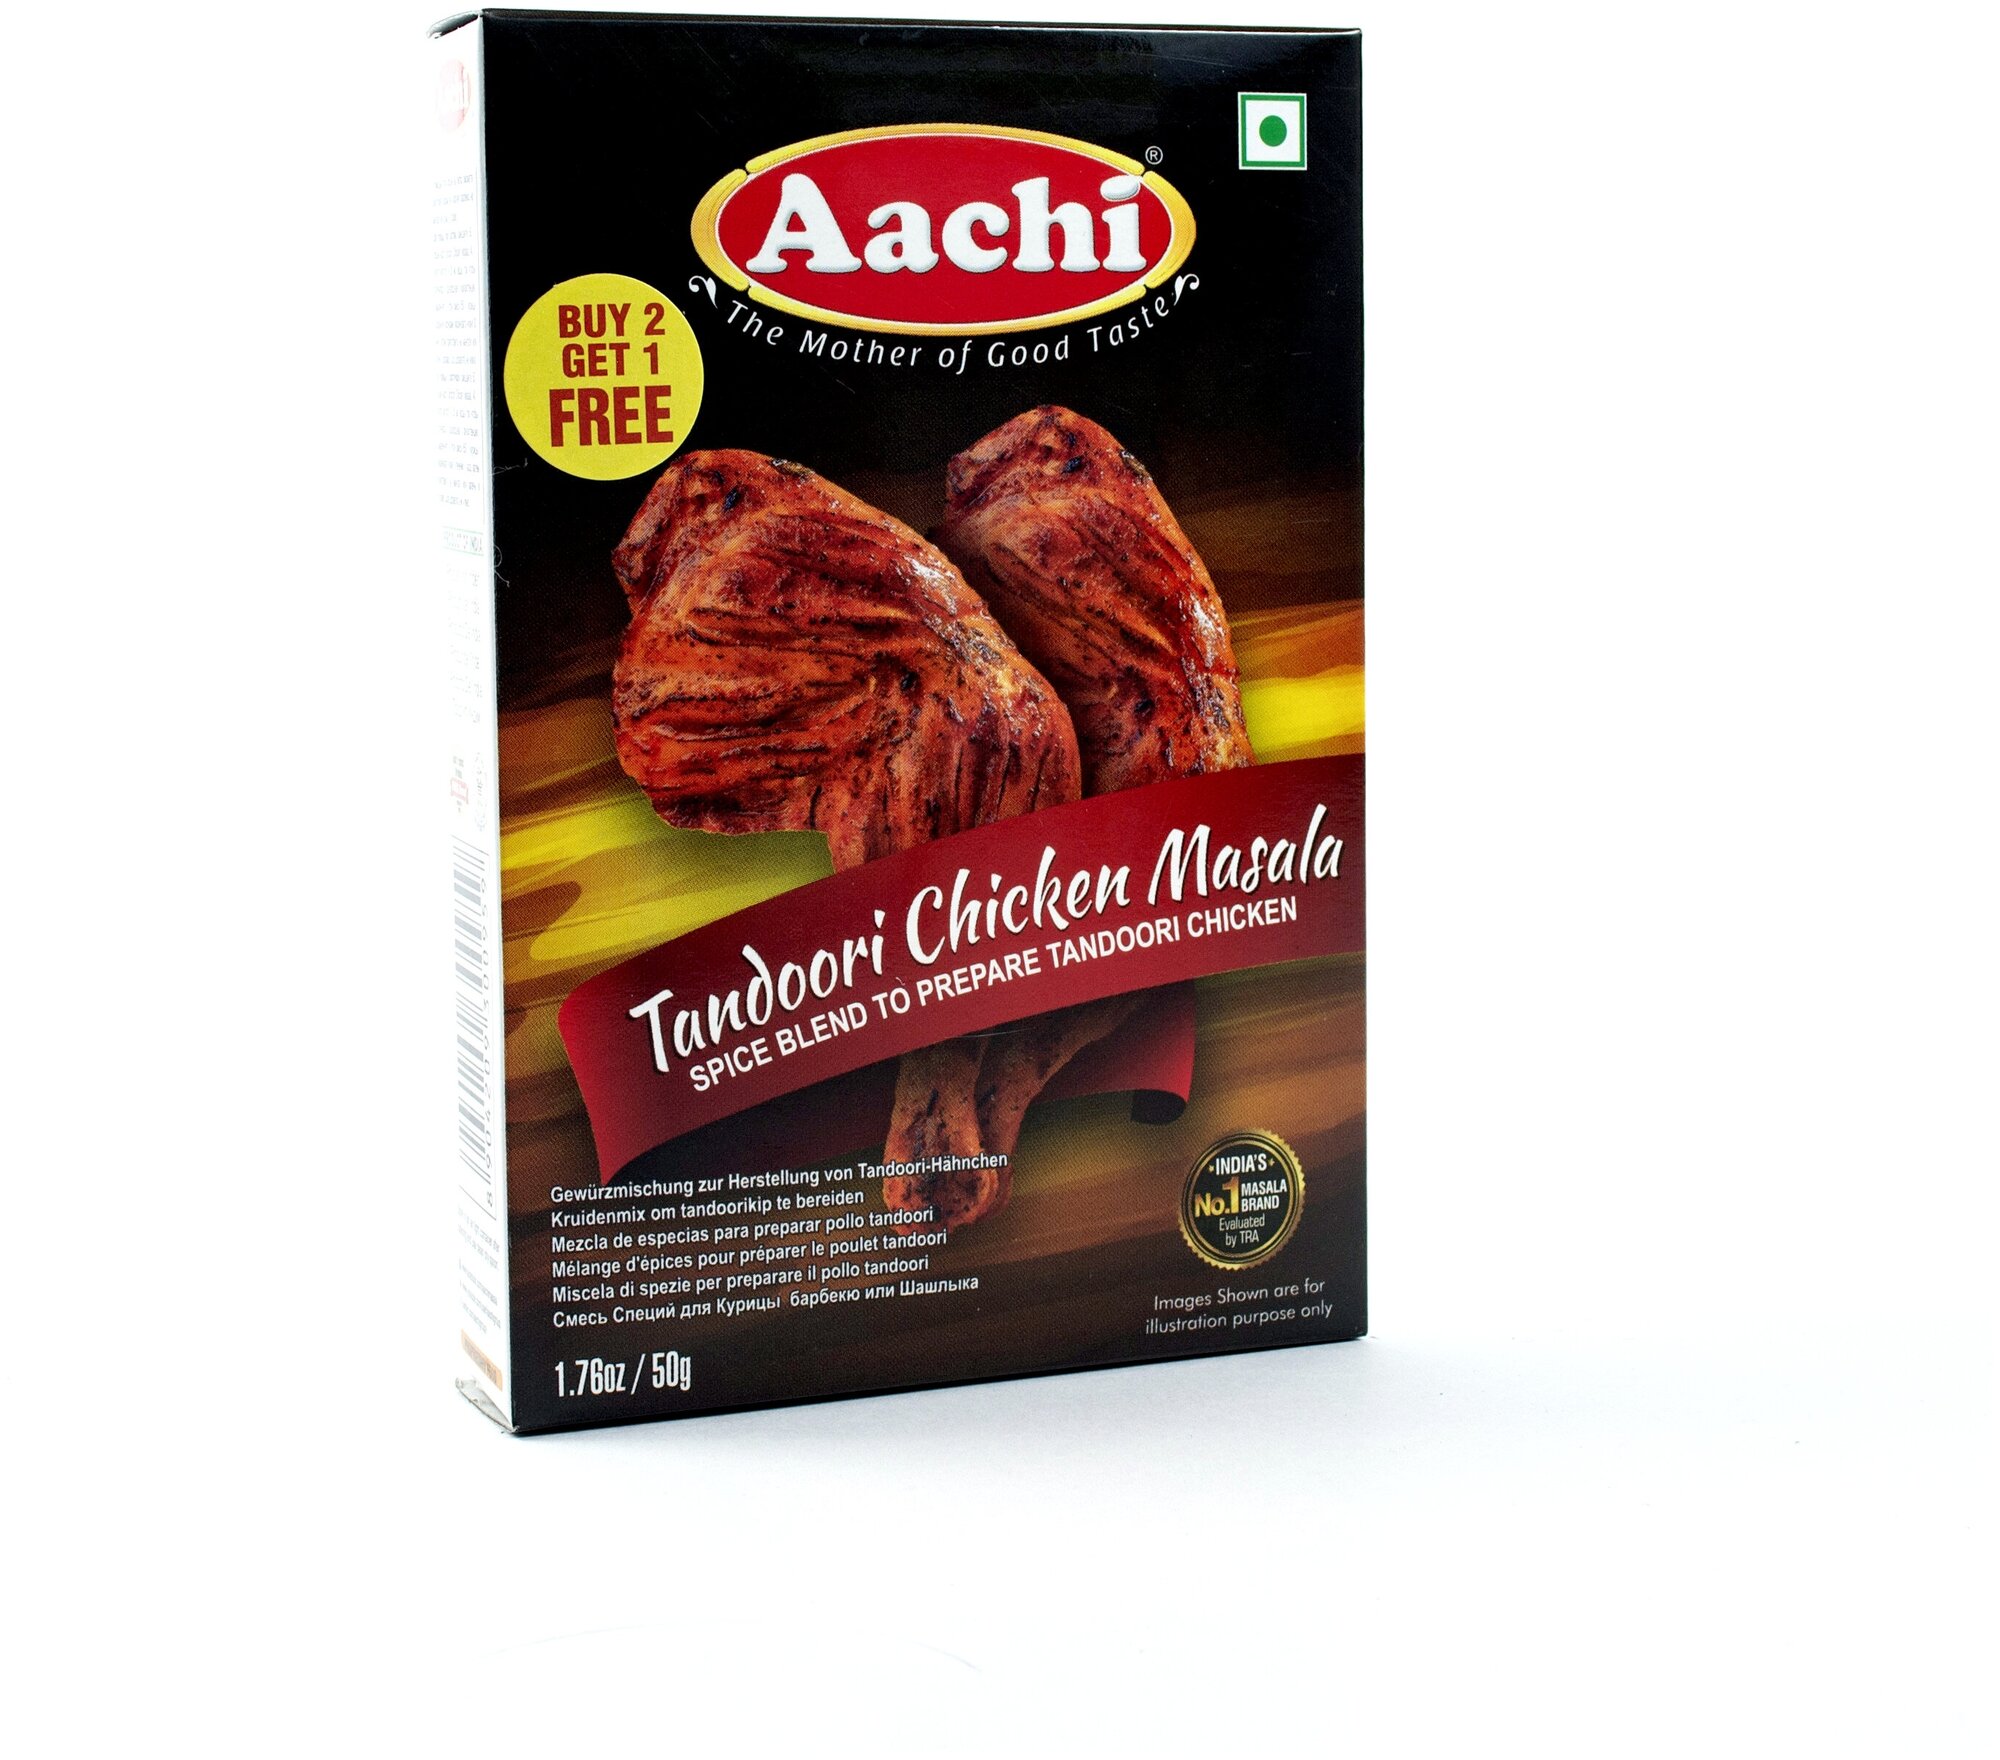 Aachi Смесь Специй для курицы в тандыре барбекю или шашлыка (Tandoori Chicken Masala) 50 г